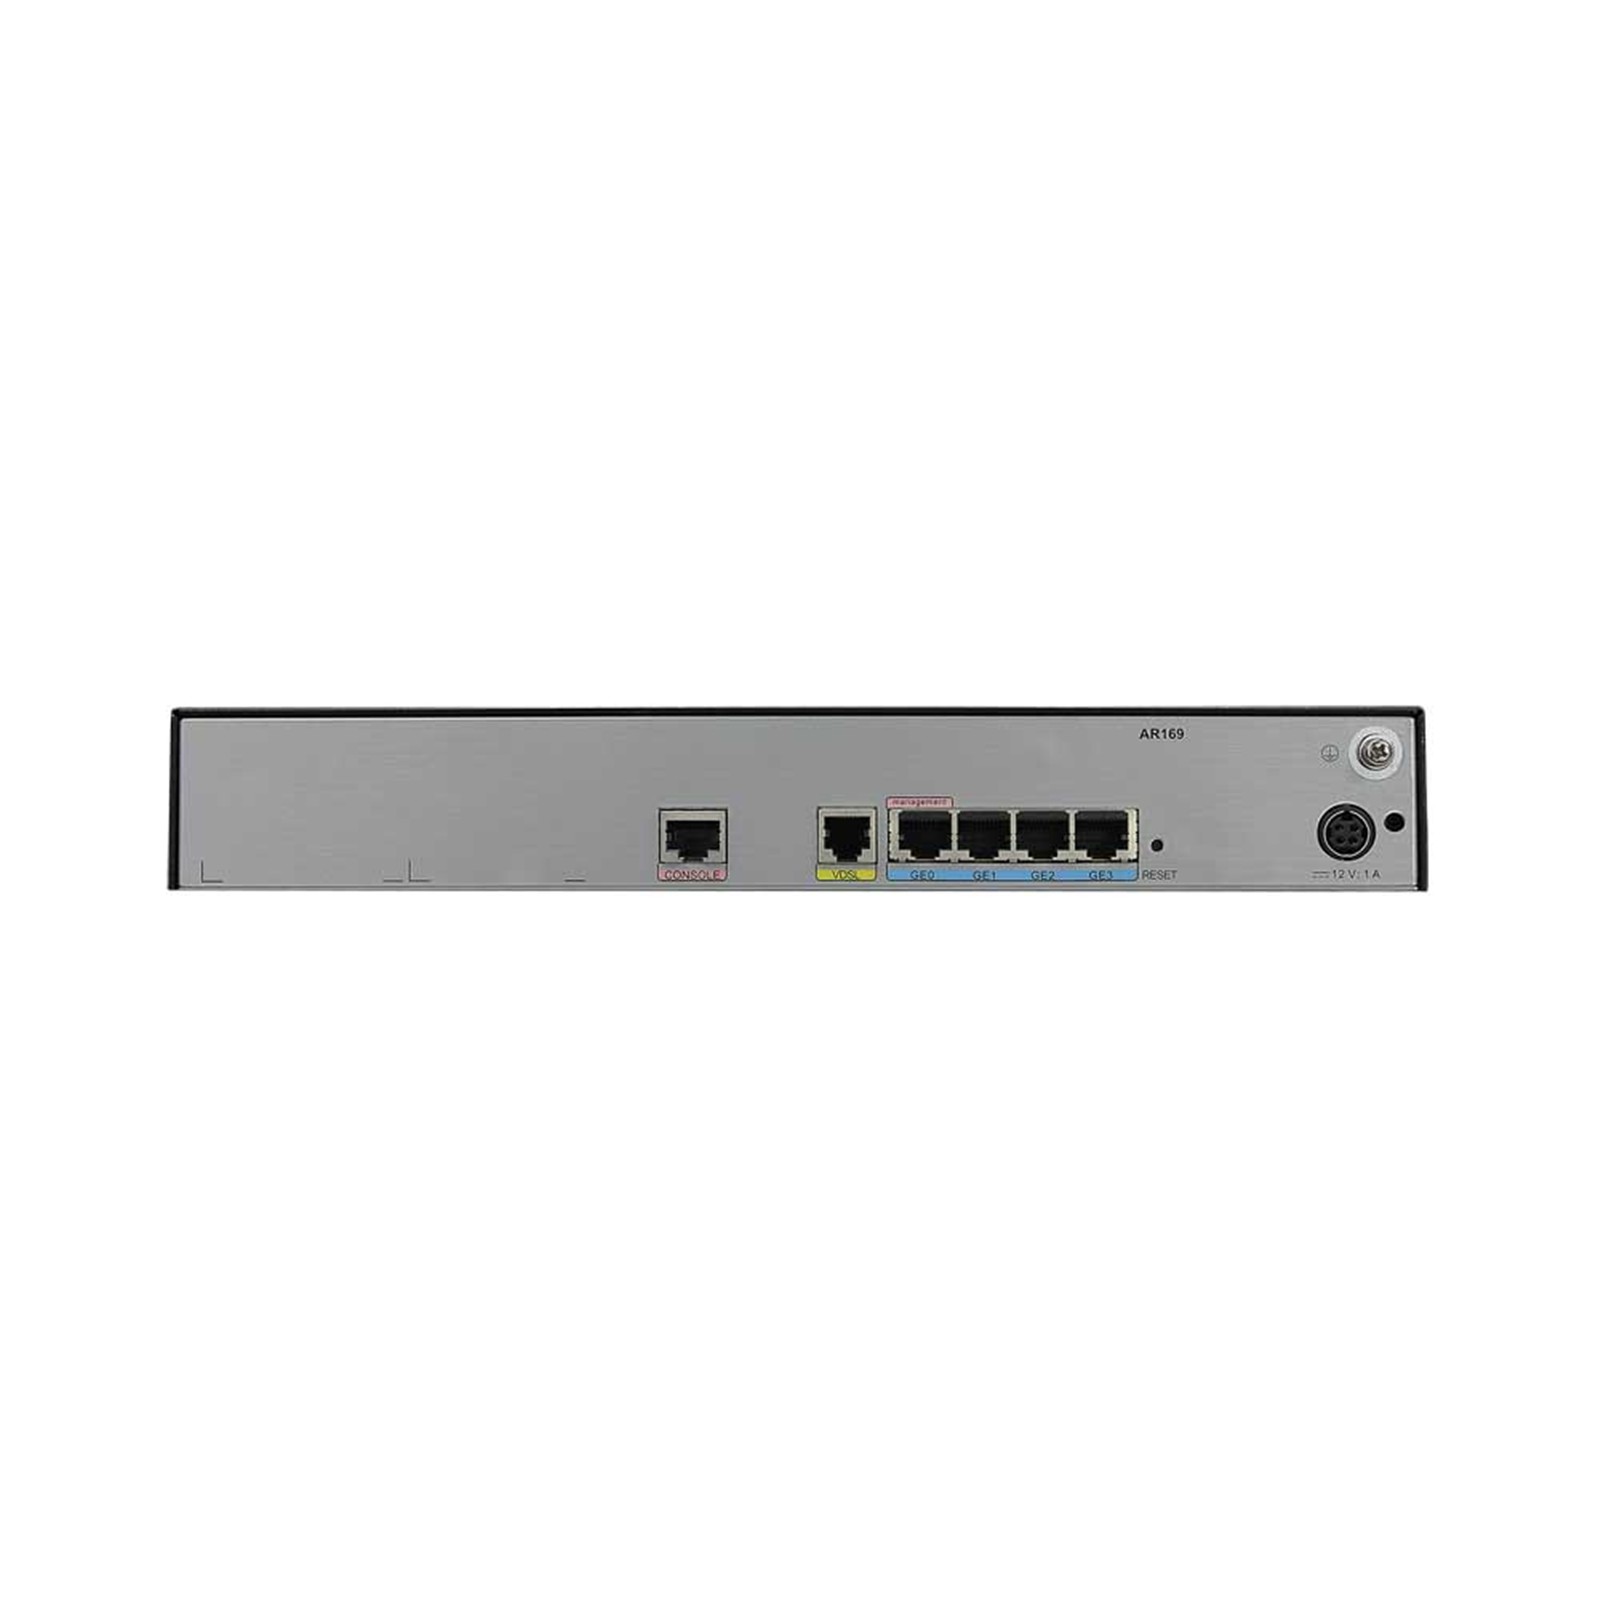 Buy the Huawei AR169 Enterprise ADSL/VDSL Gigabit Modem Router, 4 x GE LAN  ( AR169 ) online - PBTech.com